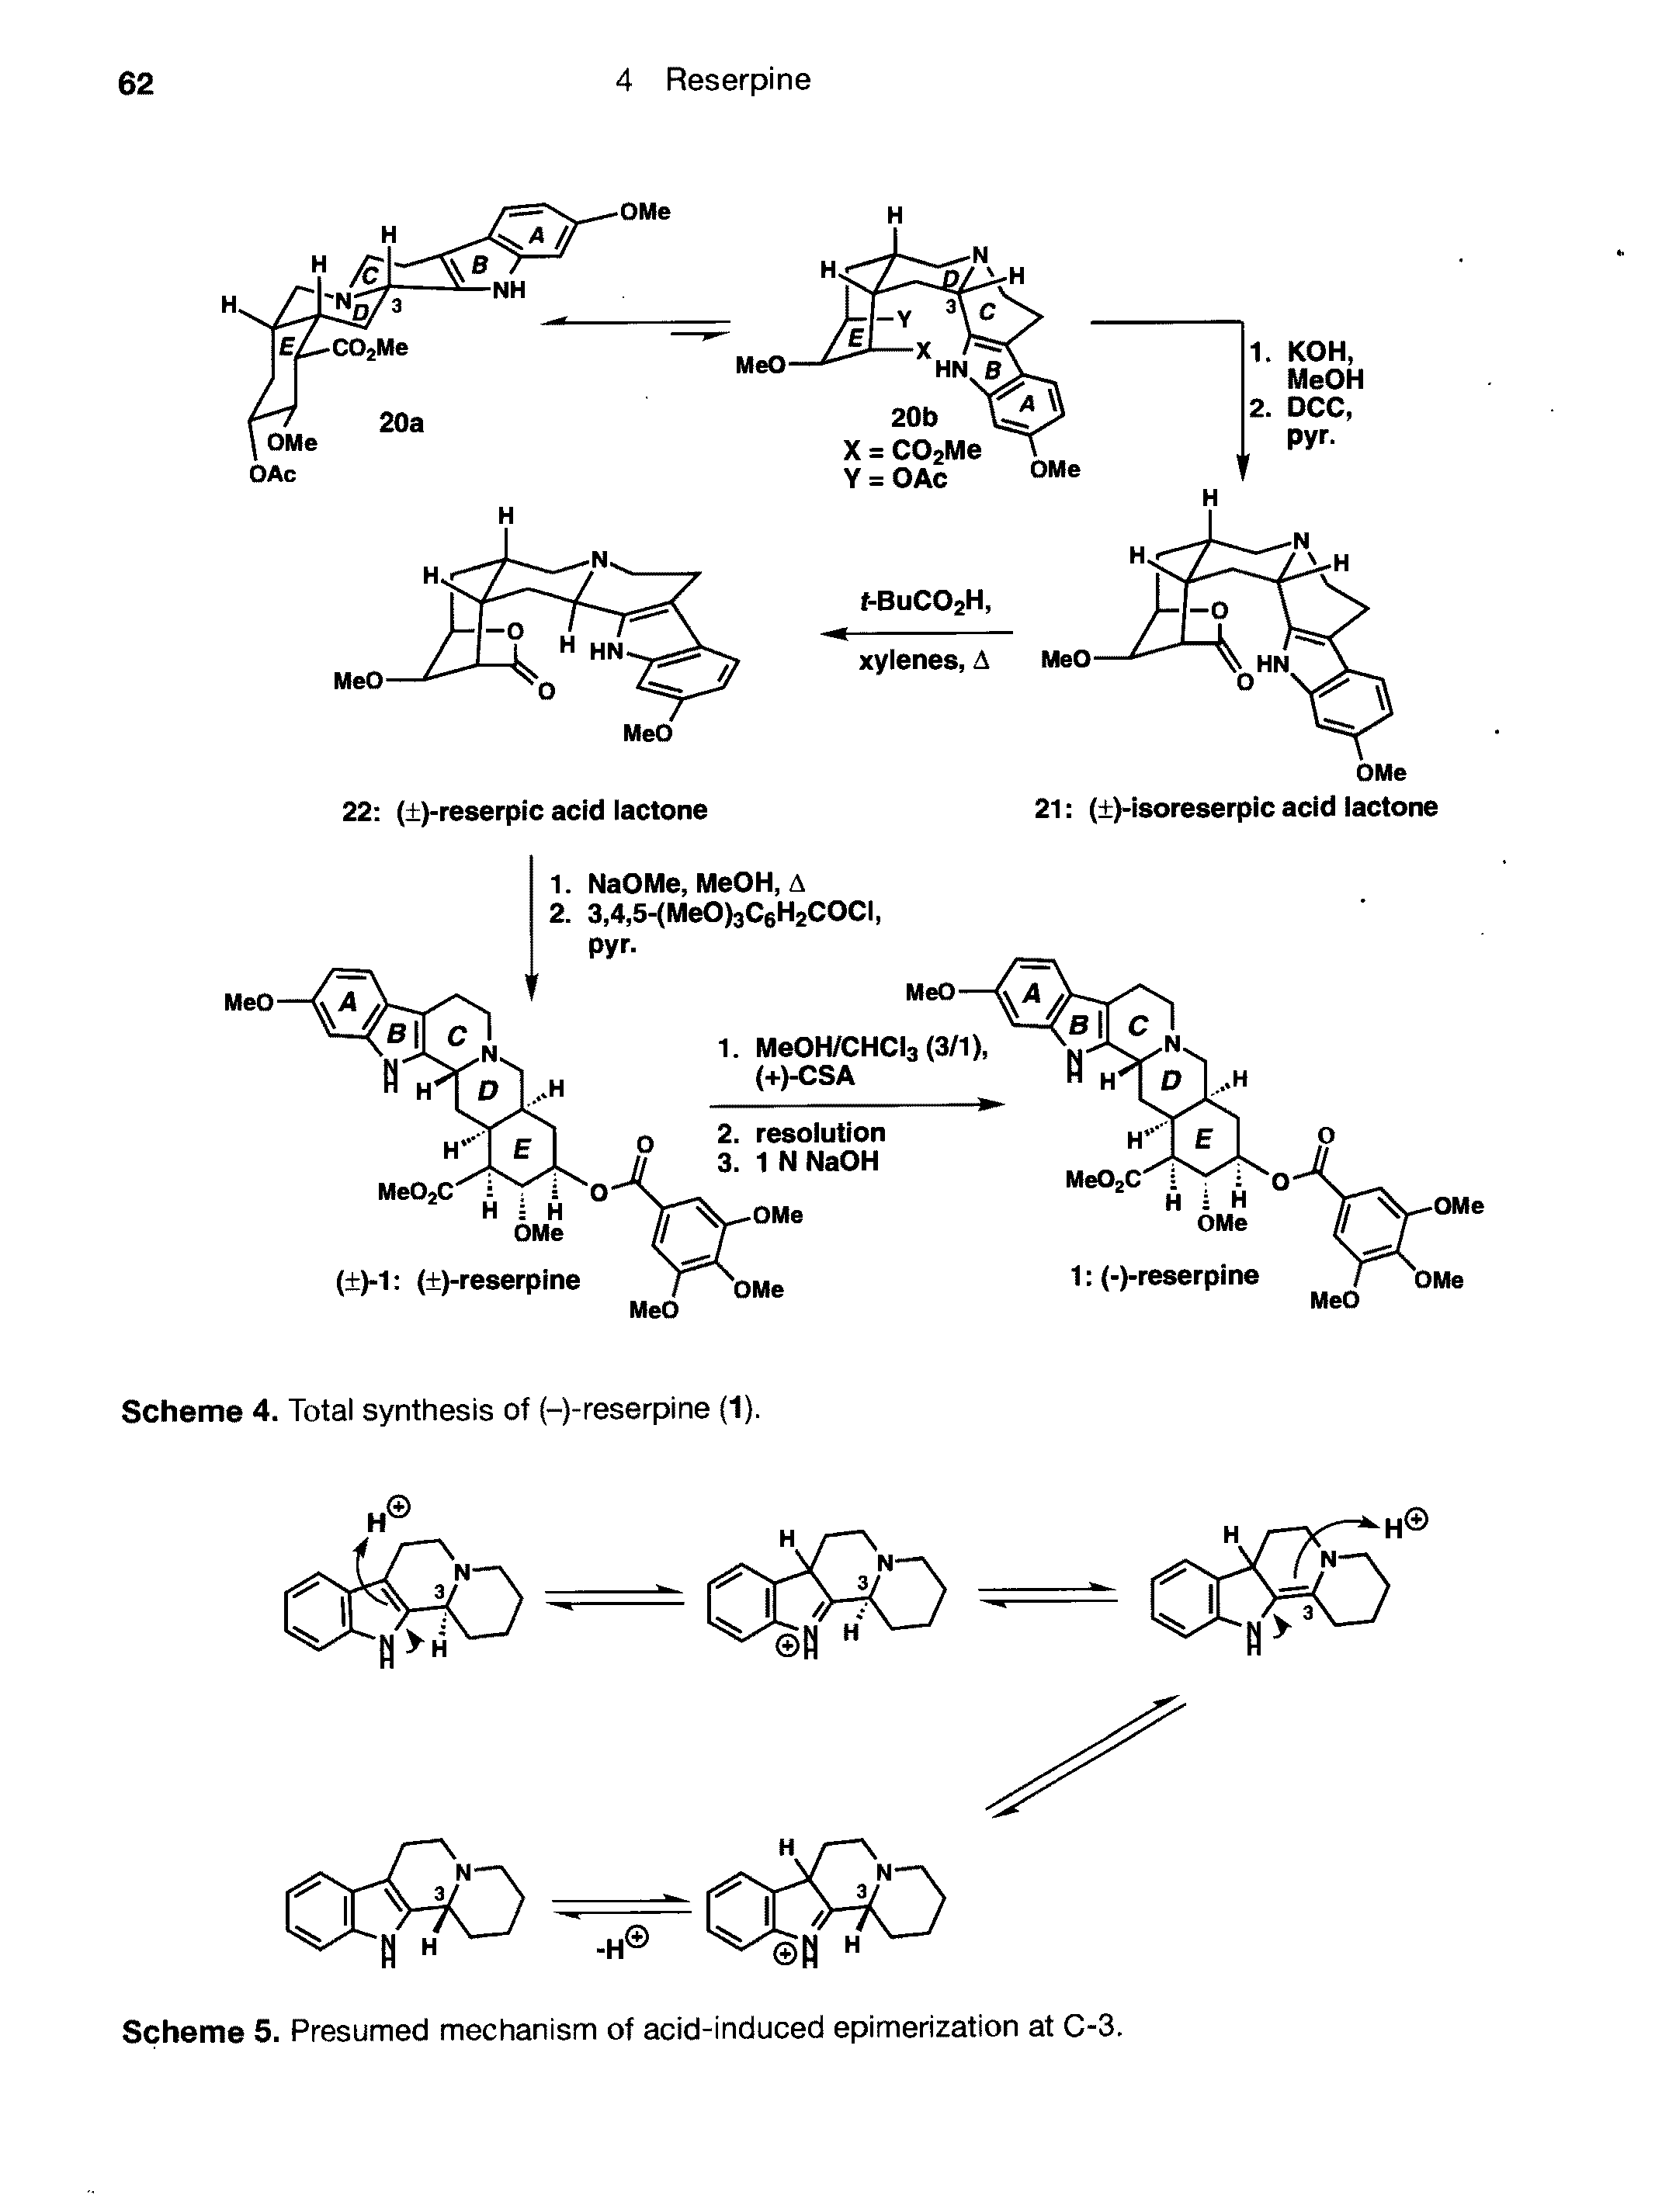 Scheme 5. Presumed mechanism of acid-induced epimerization at C-3.